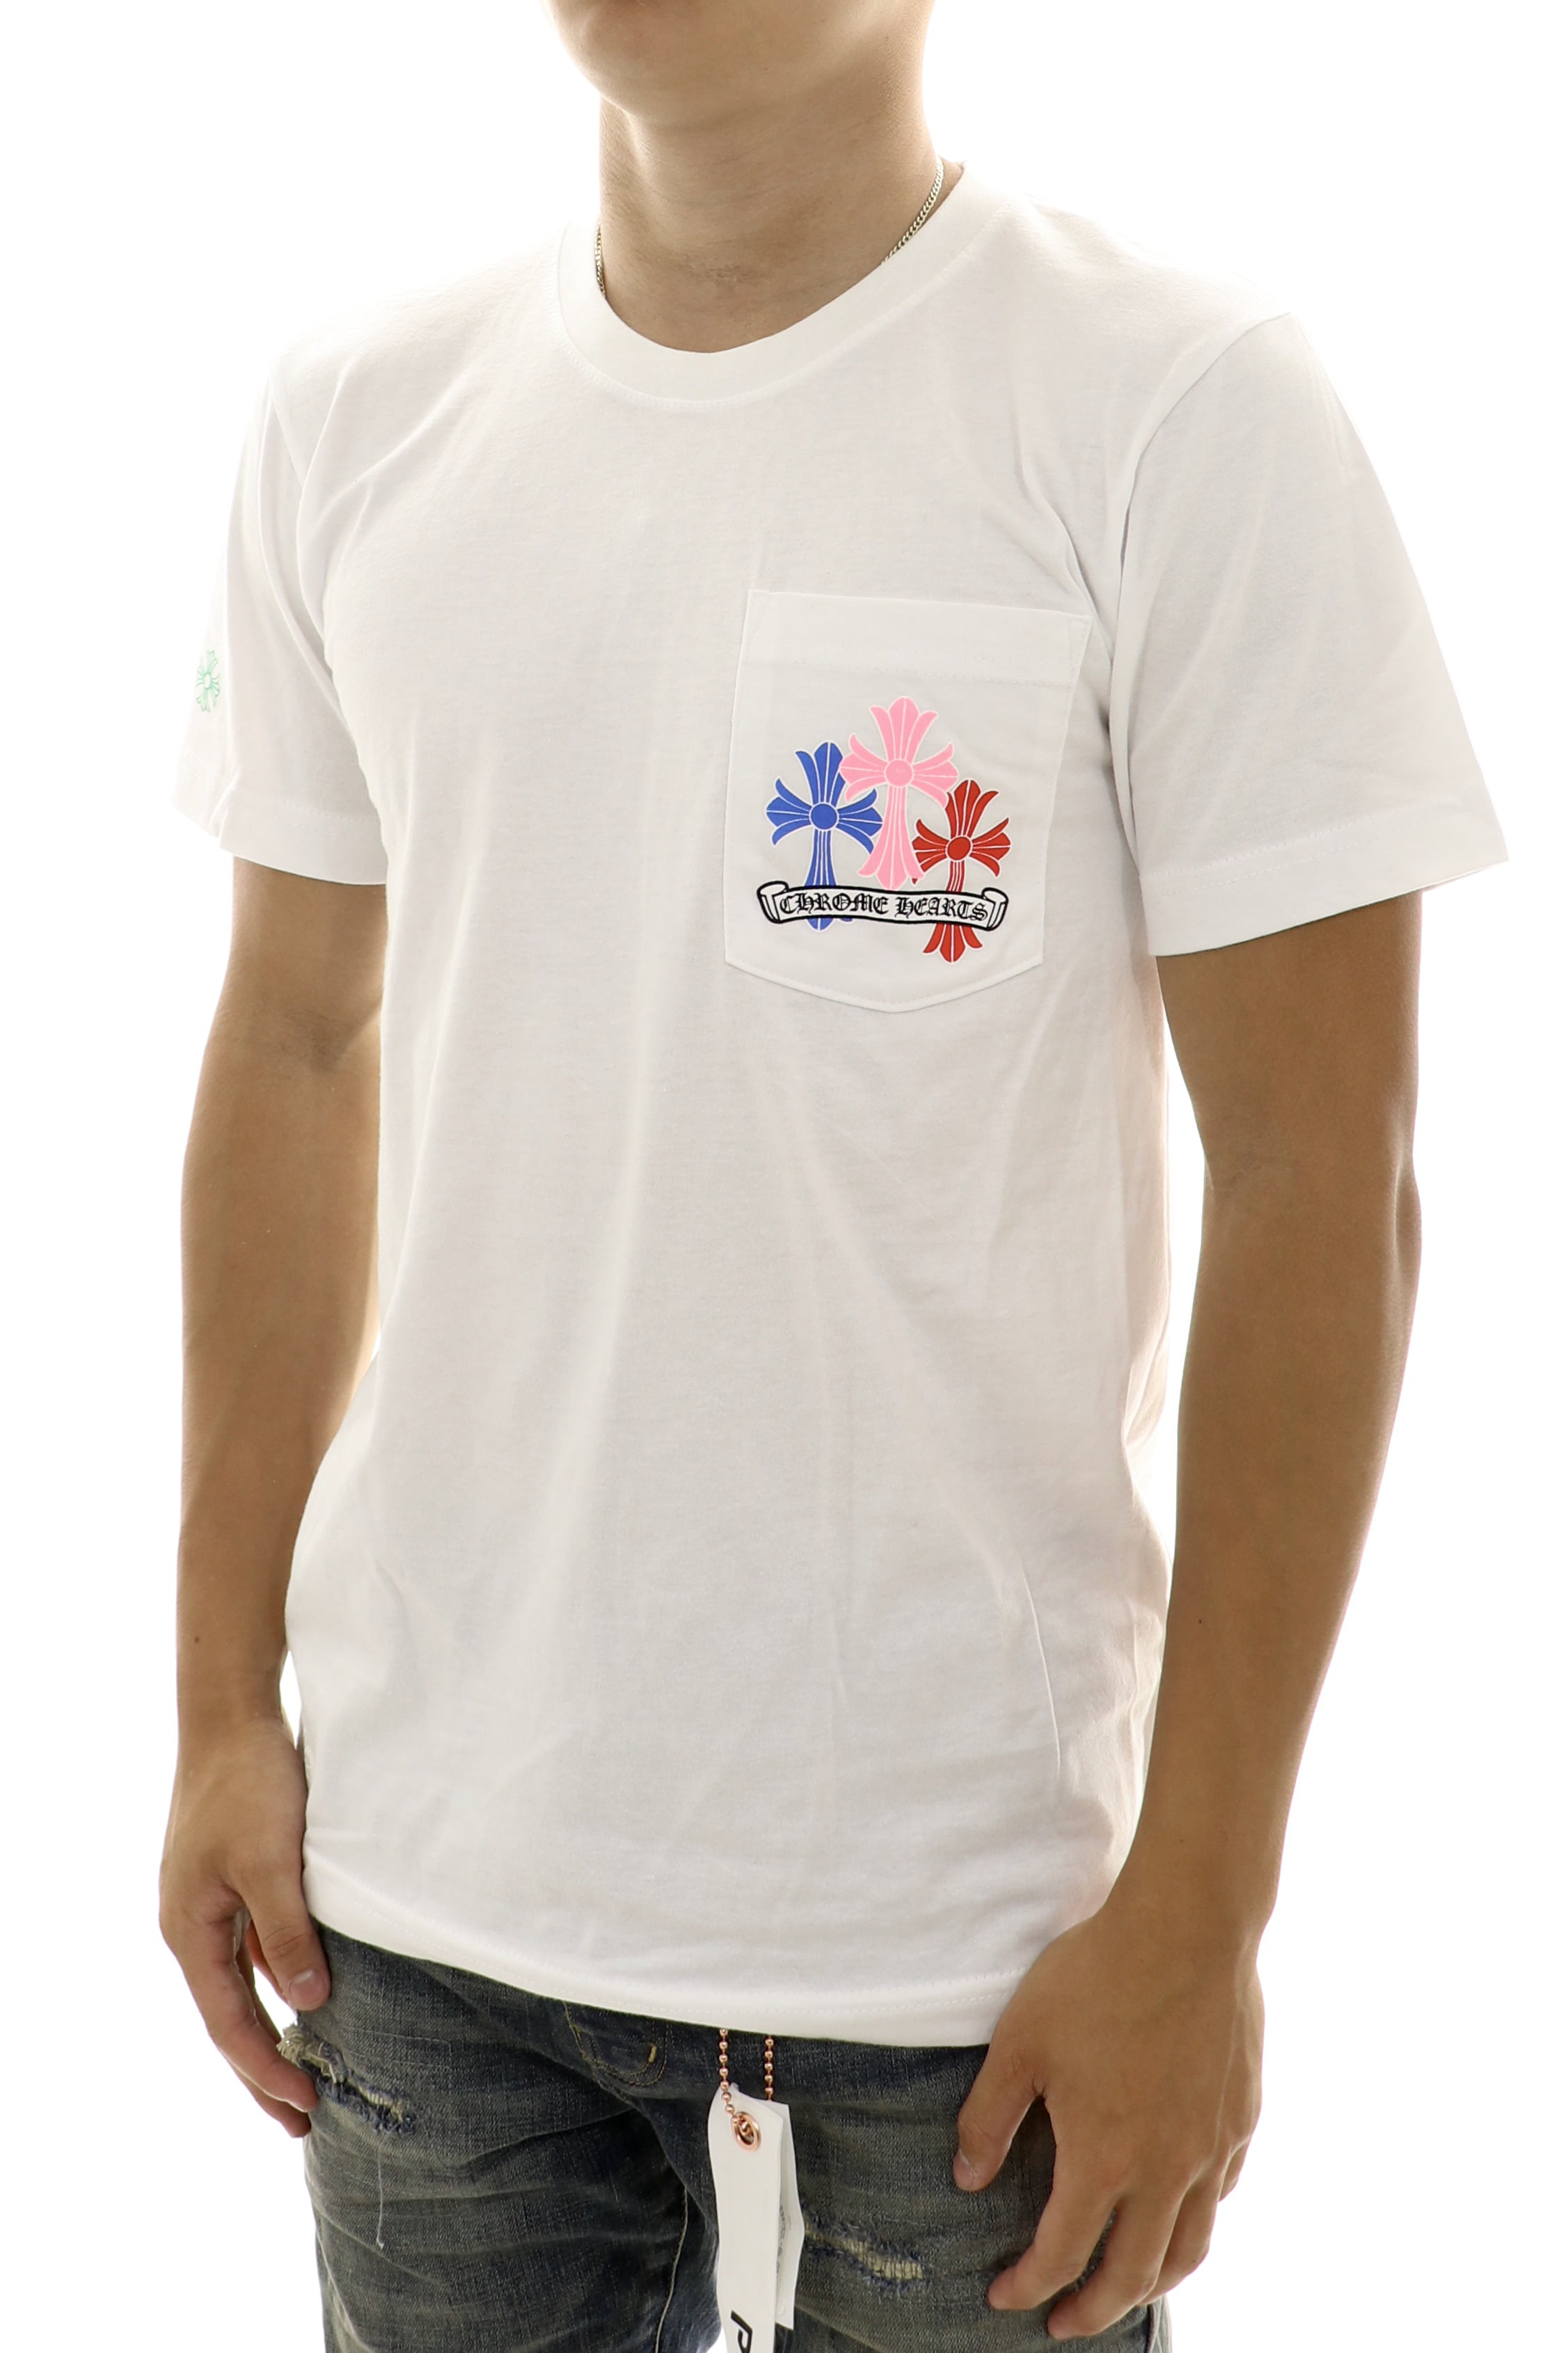 Chrome Hearts Multi Color Cross Cemetery T-Shirt XLARGE WHITE